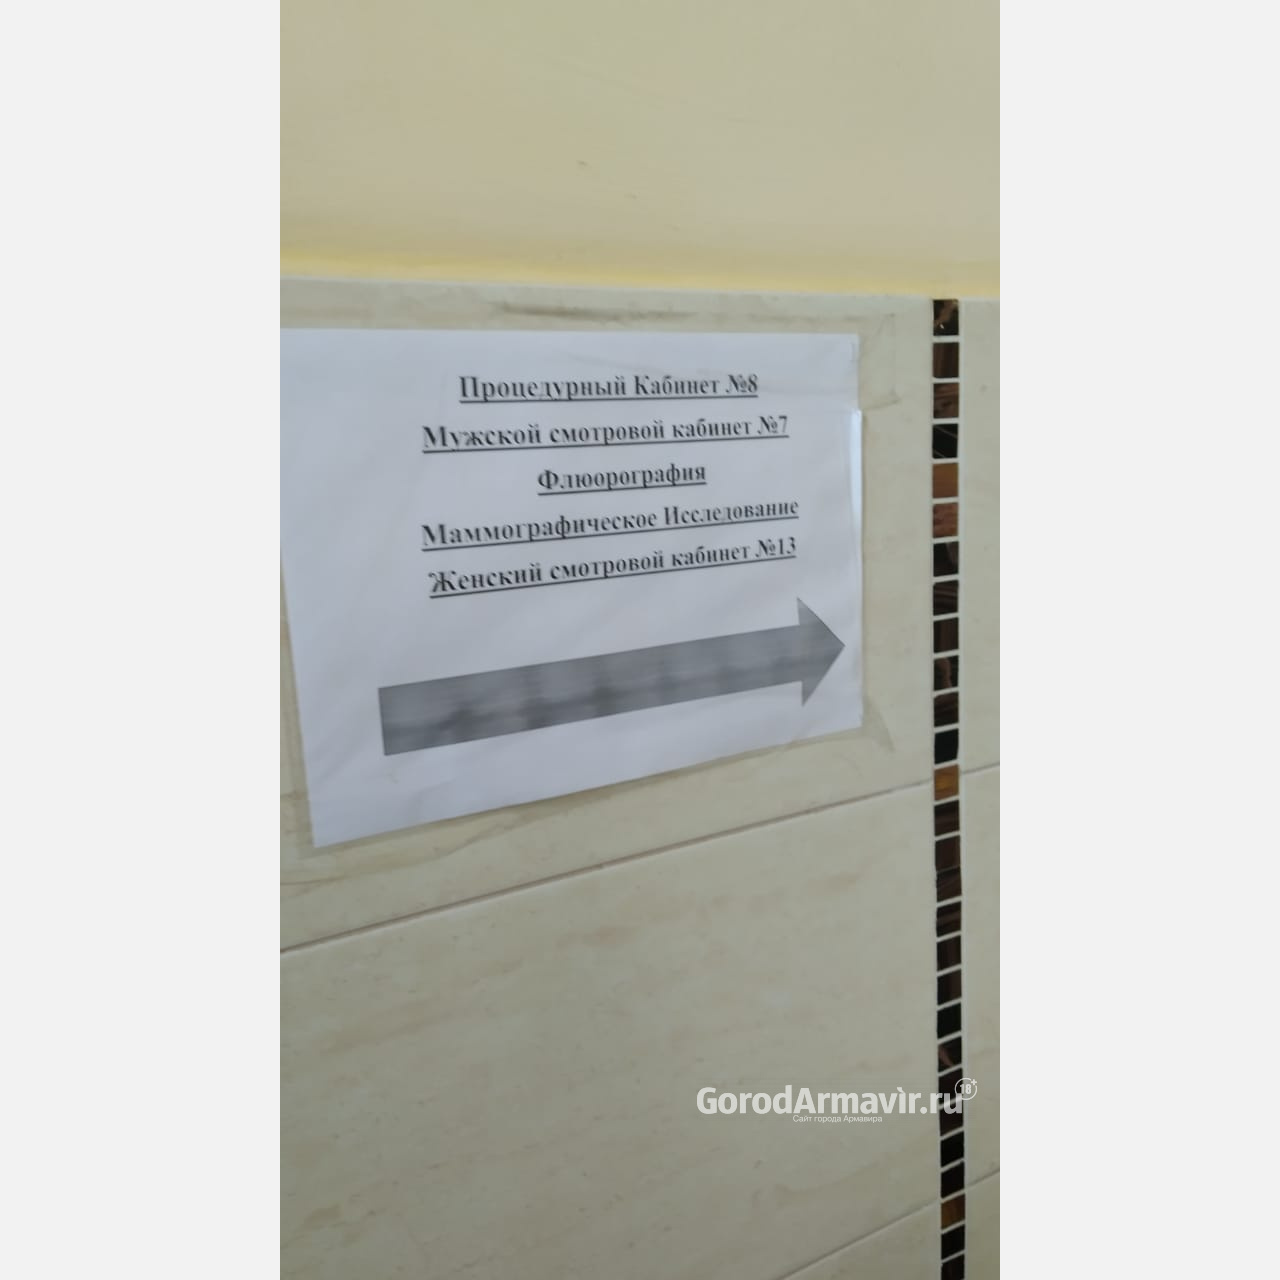 Коронавирус в Армавире: на 15 марта заразились 2 человека 